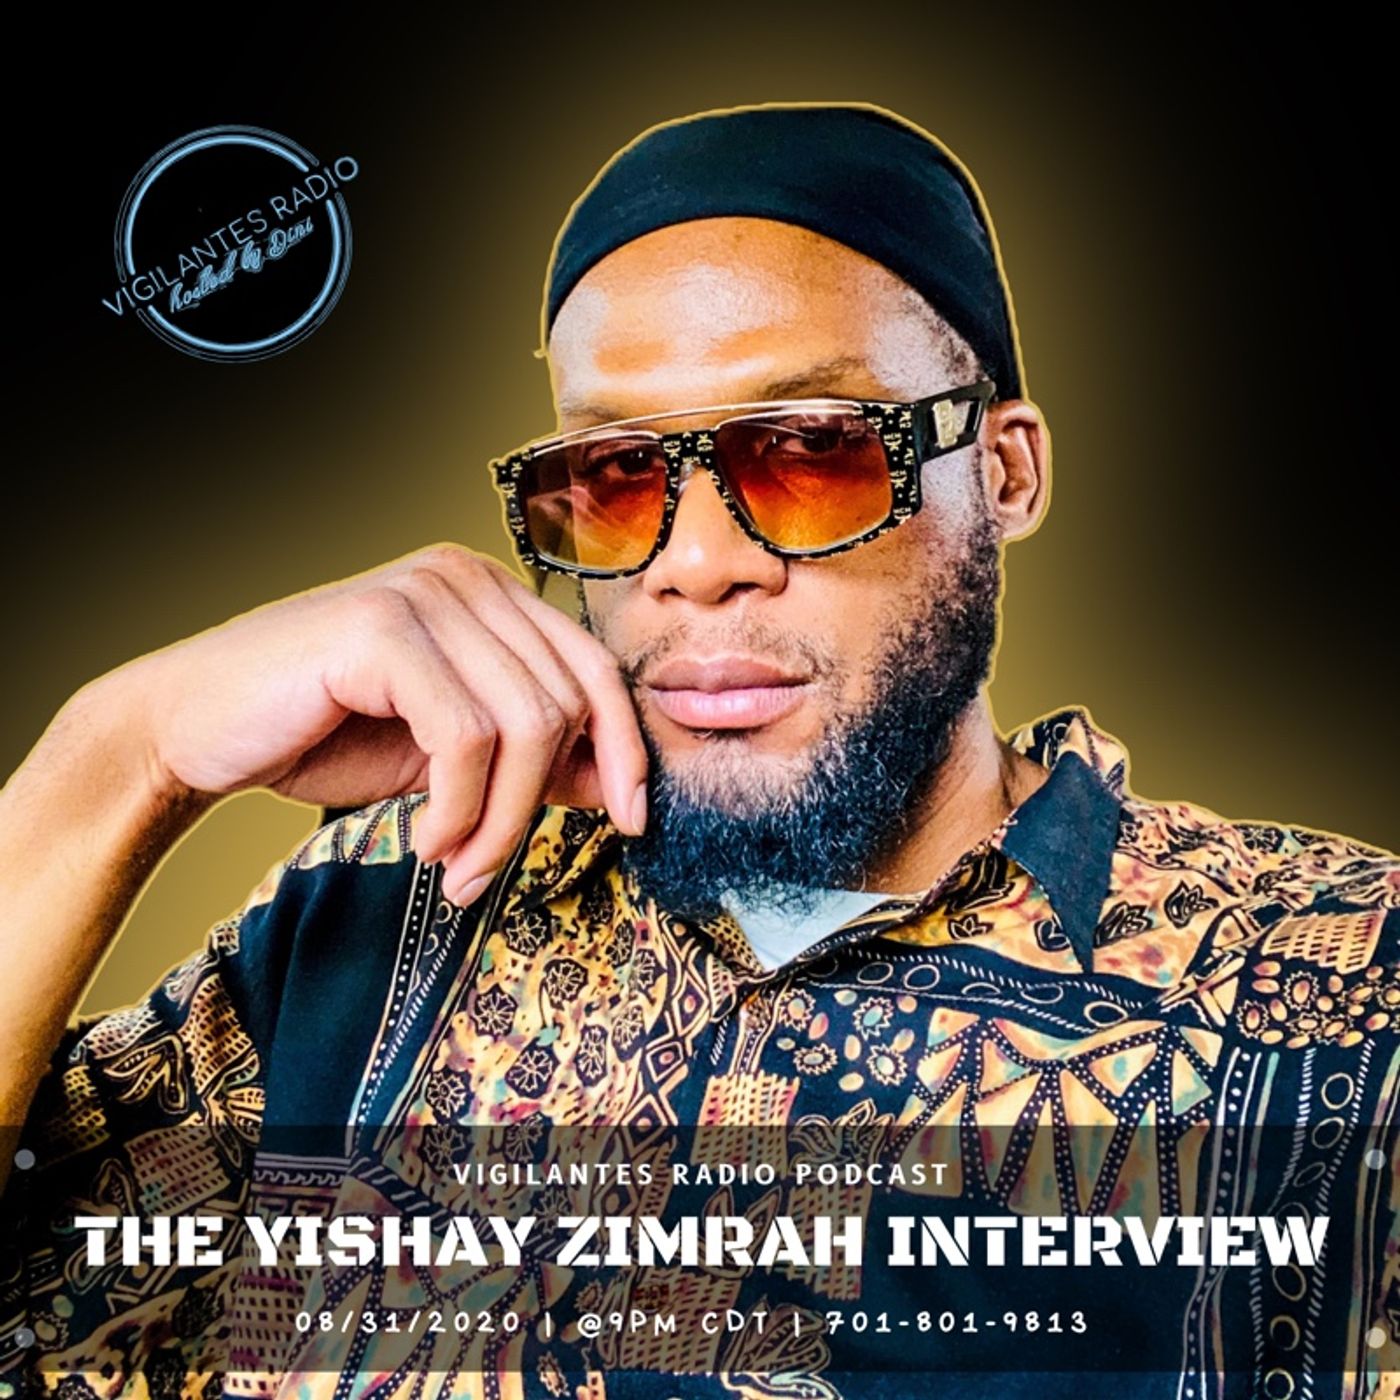 The Yishay Zimrah Interview. Image